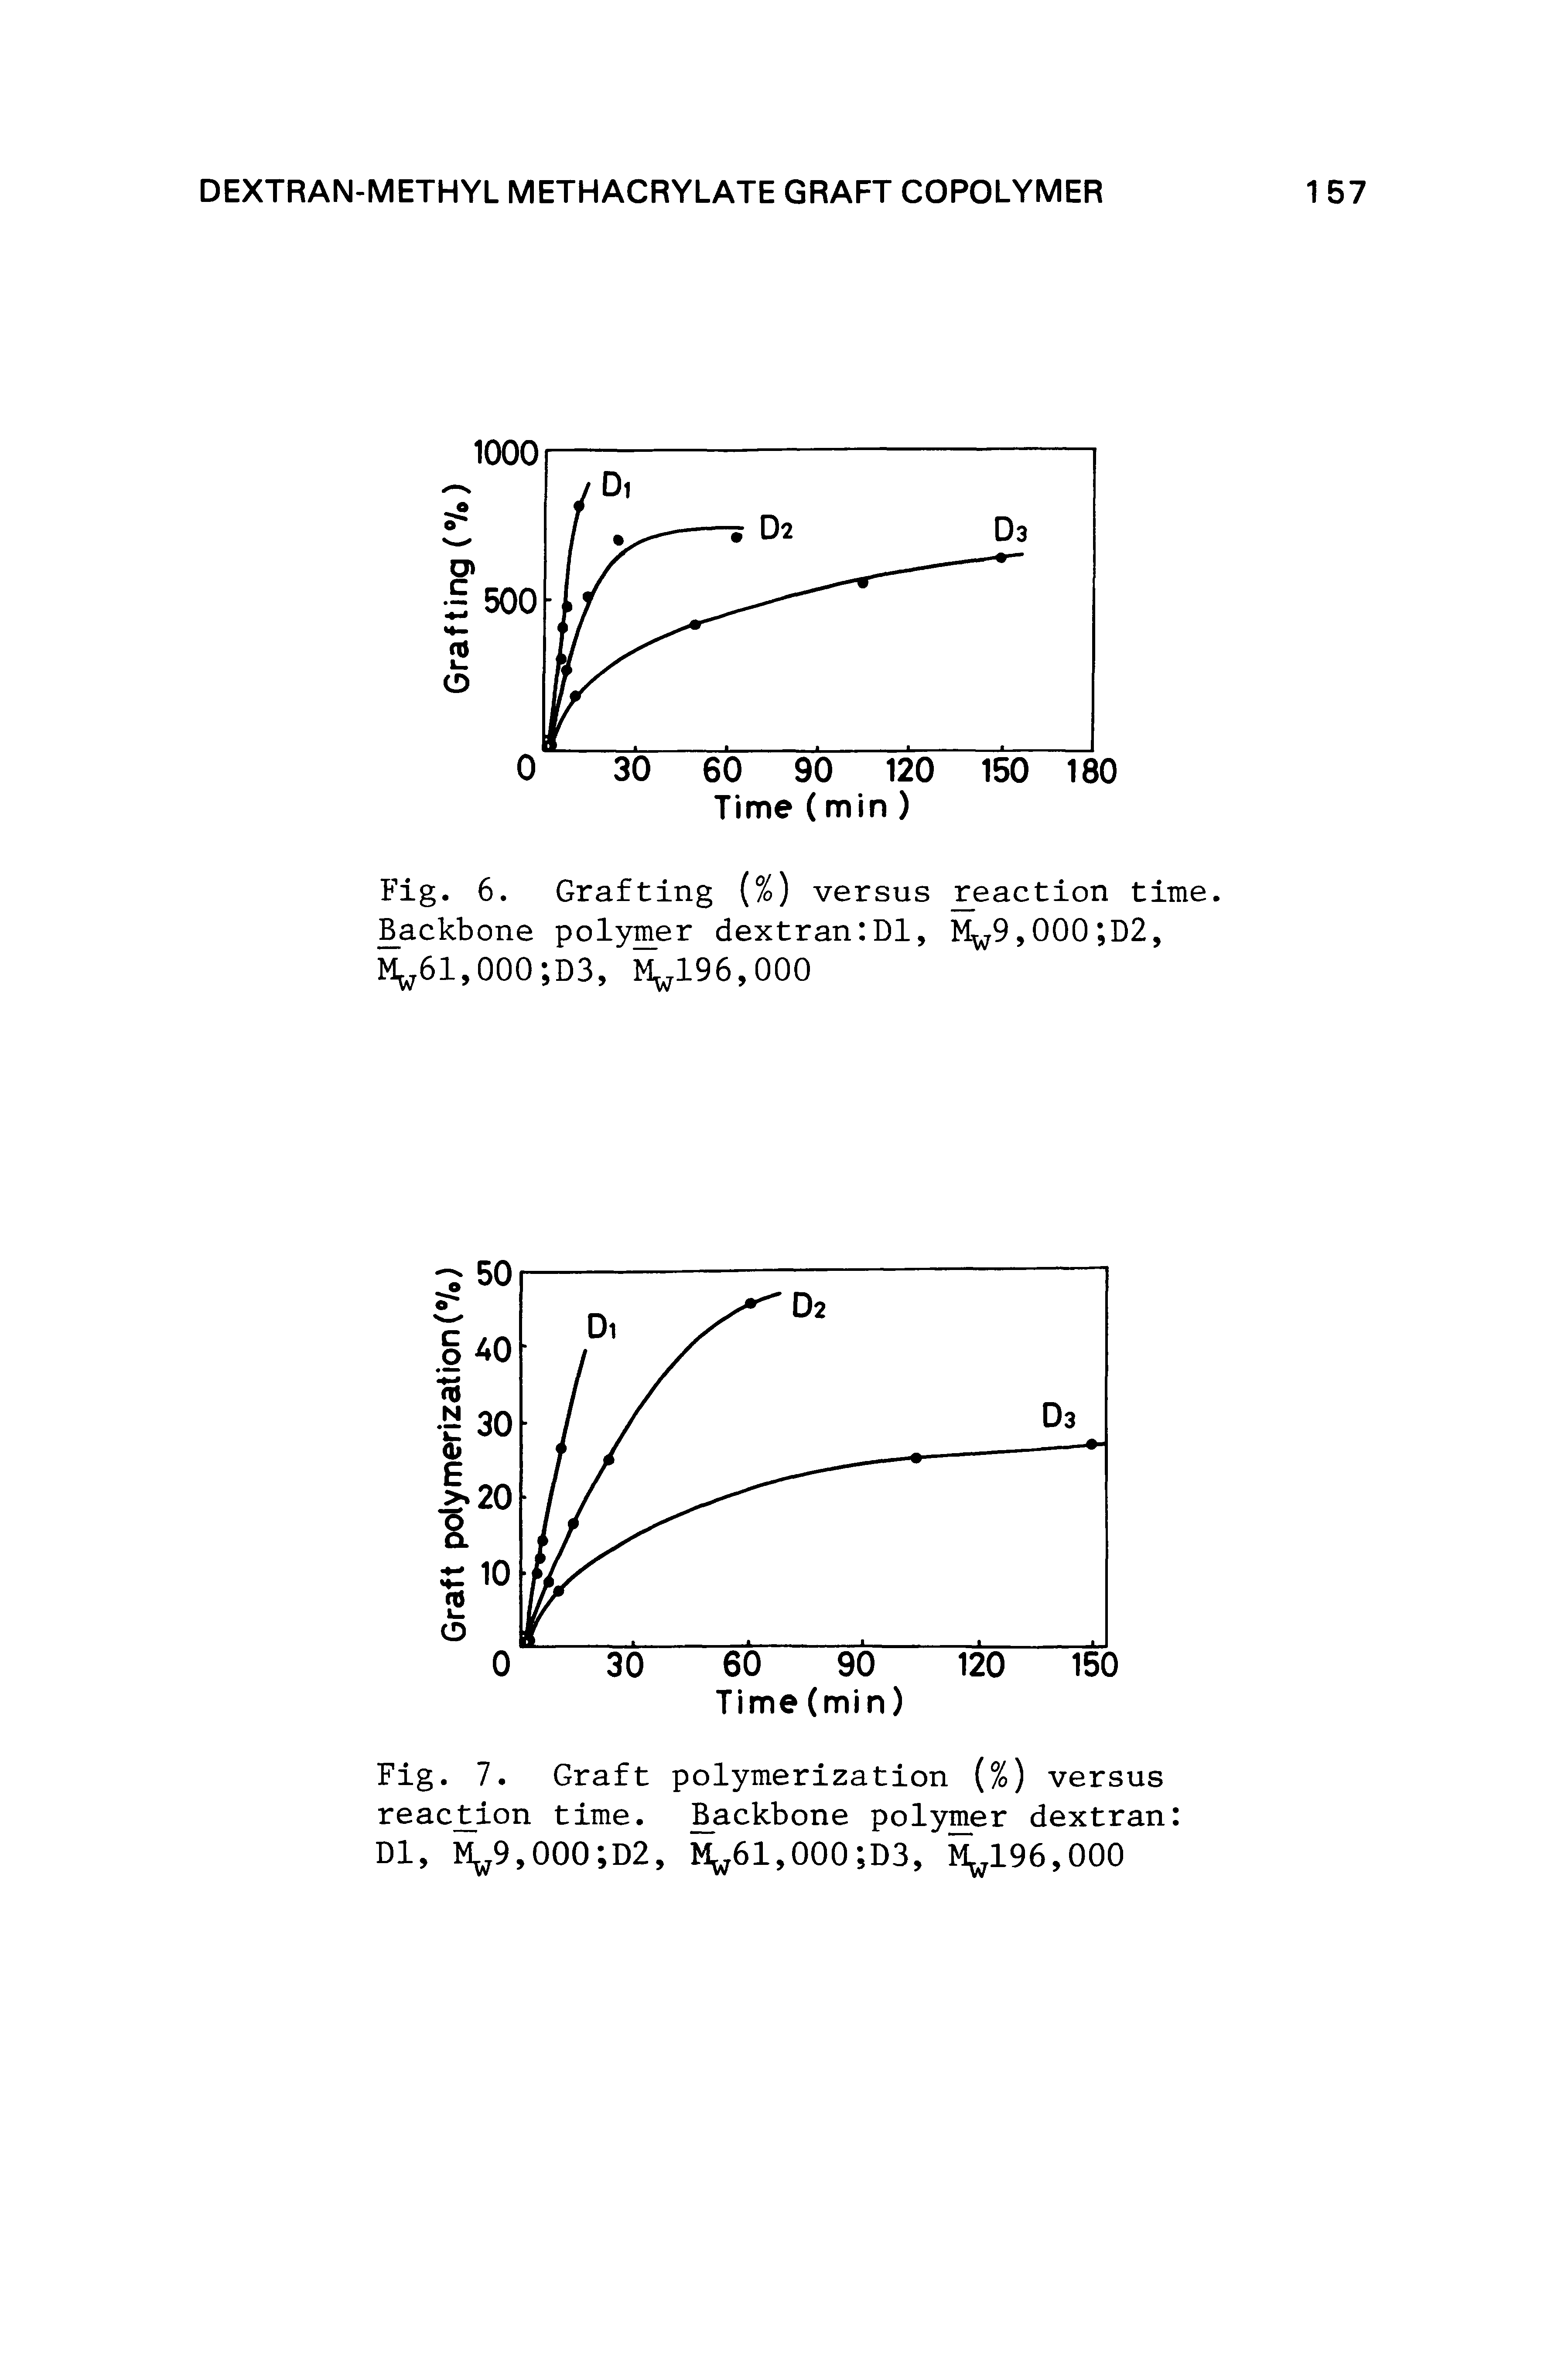 Fig. 7. Graft polymerization (%) versus reac tion time. Backbone polymer dextran Dl, M 9,000 D2, M 61,000 D3, M 196,000...